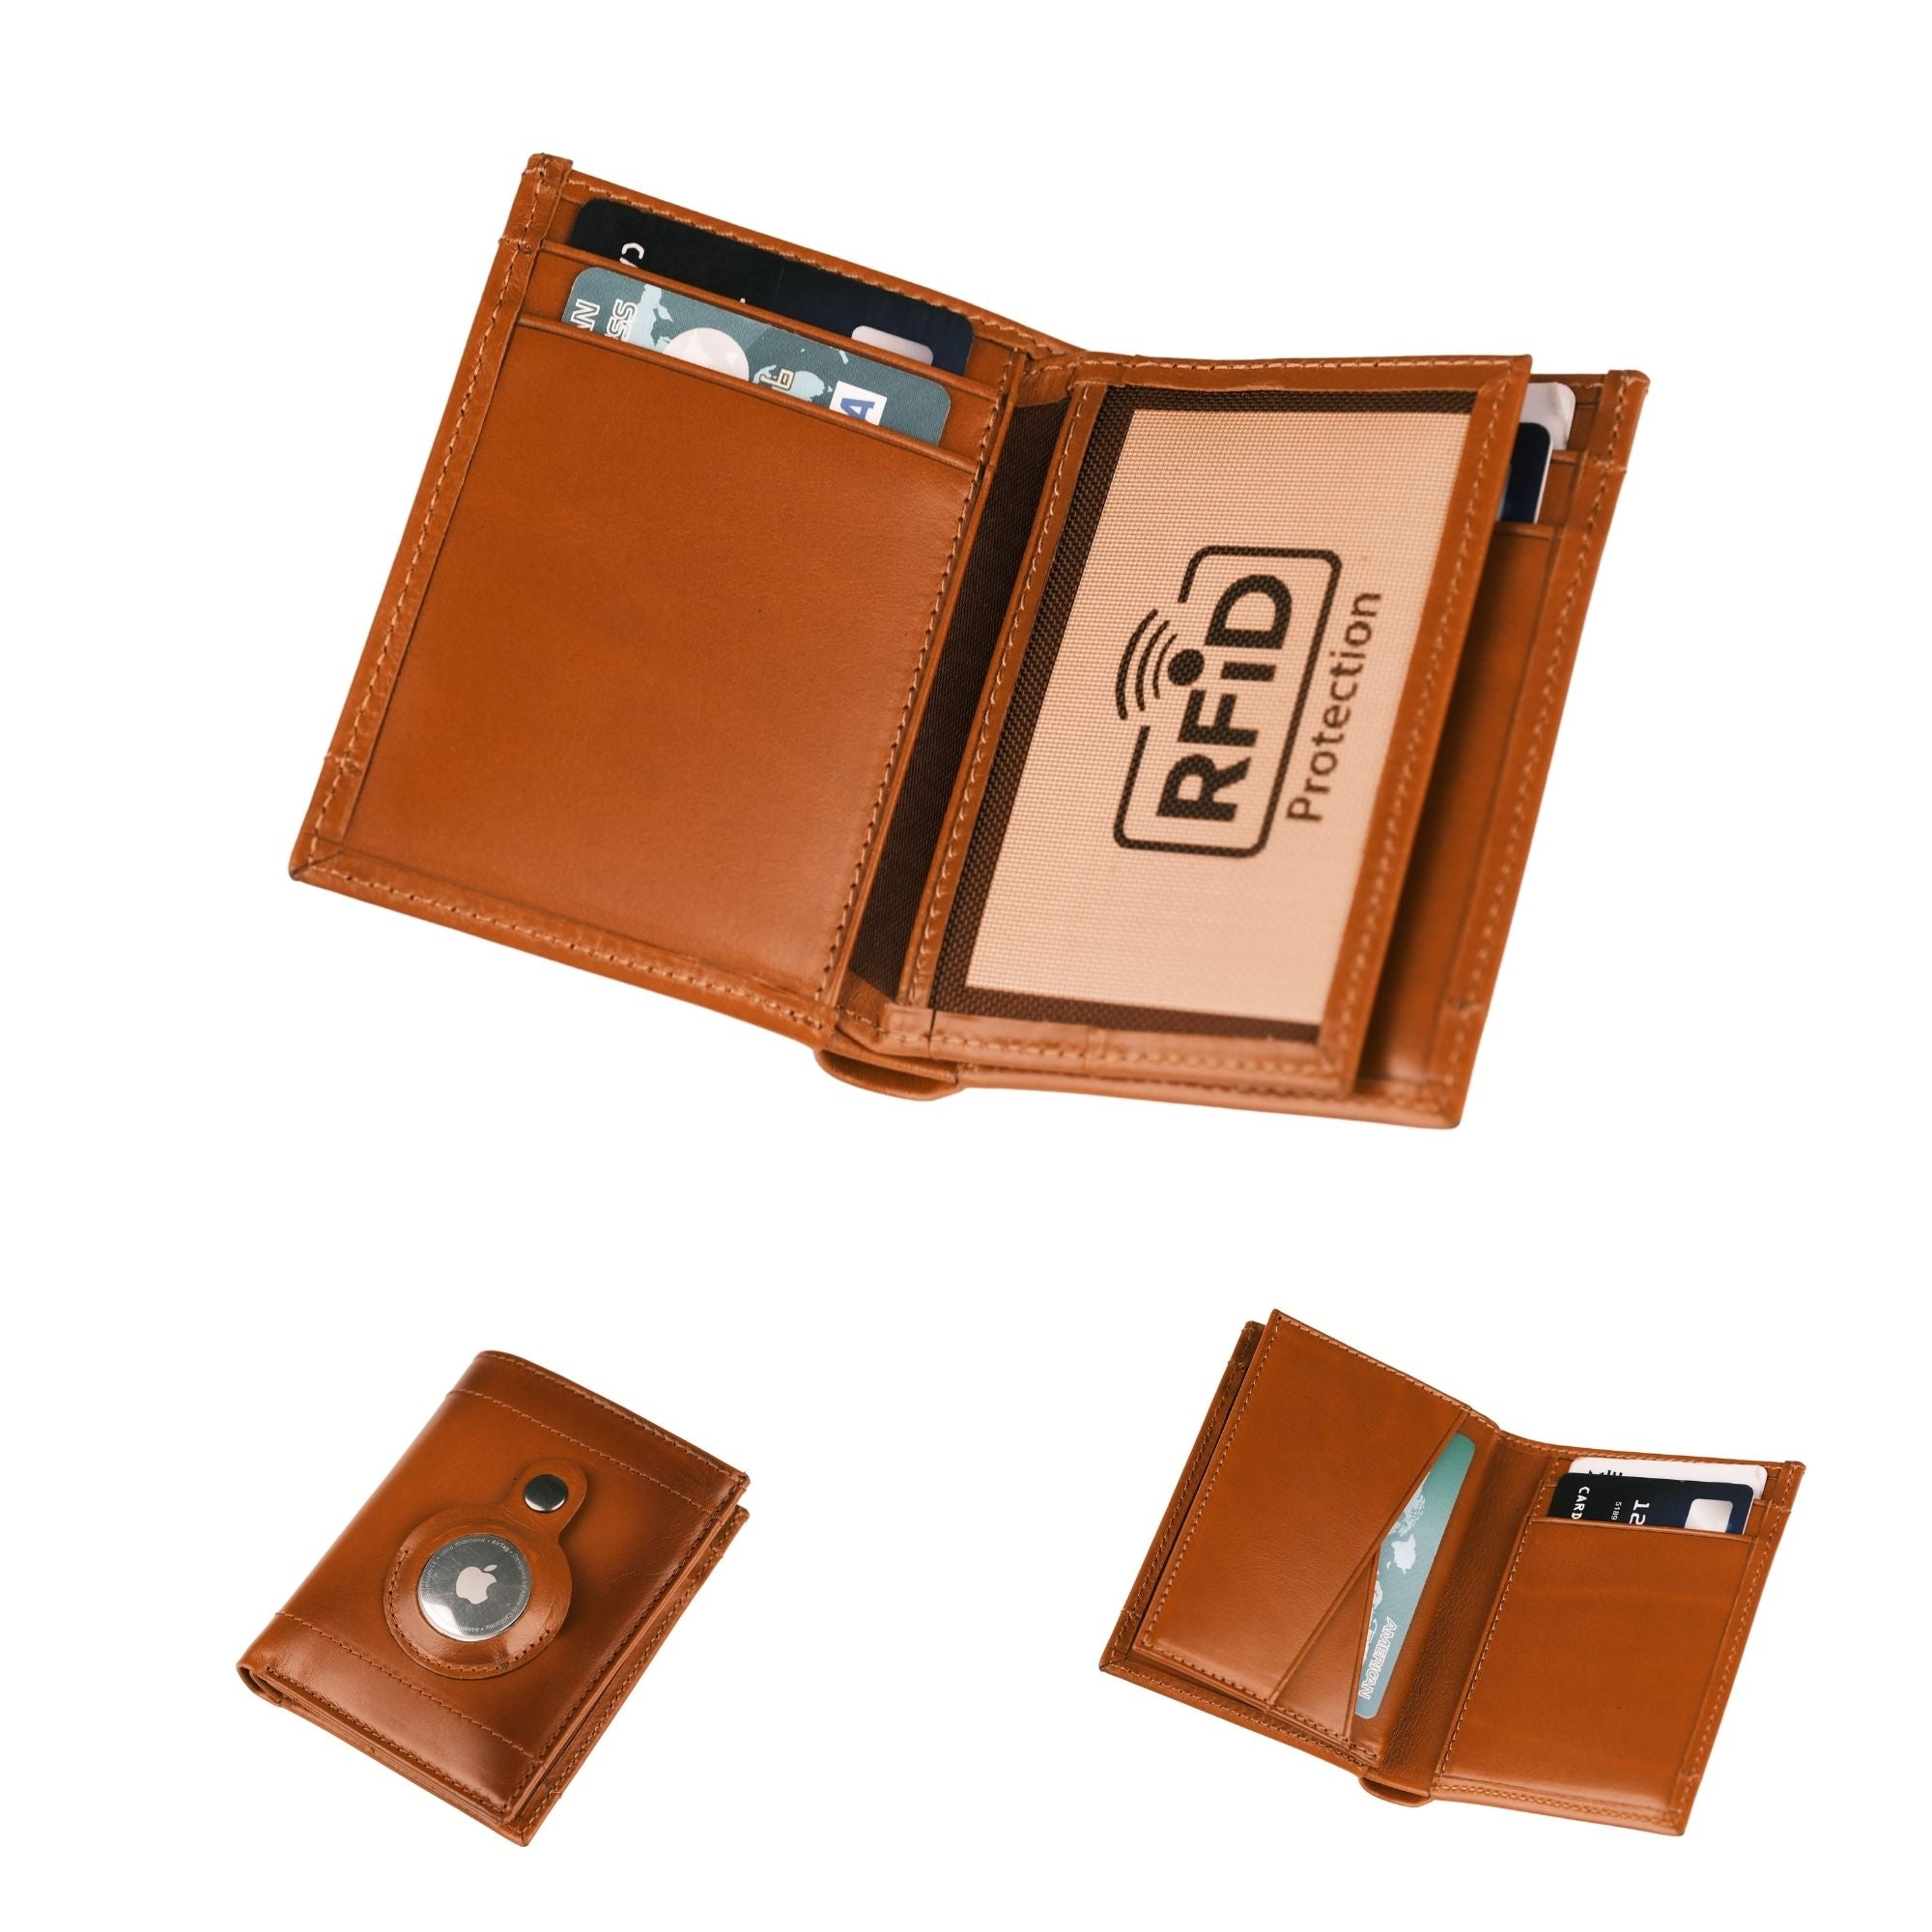 Glendo Apple AirTag Slot Leather Wallet, Handcrafted, Unisex - Tan - TORONATA